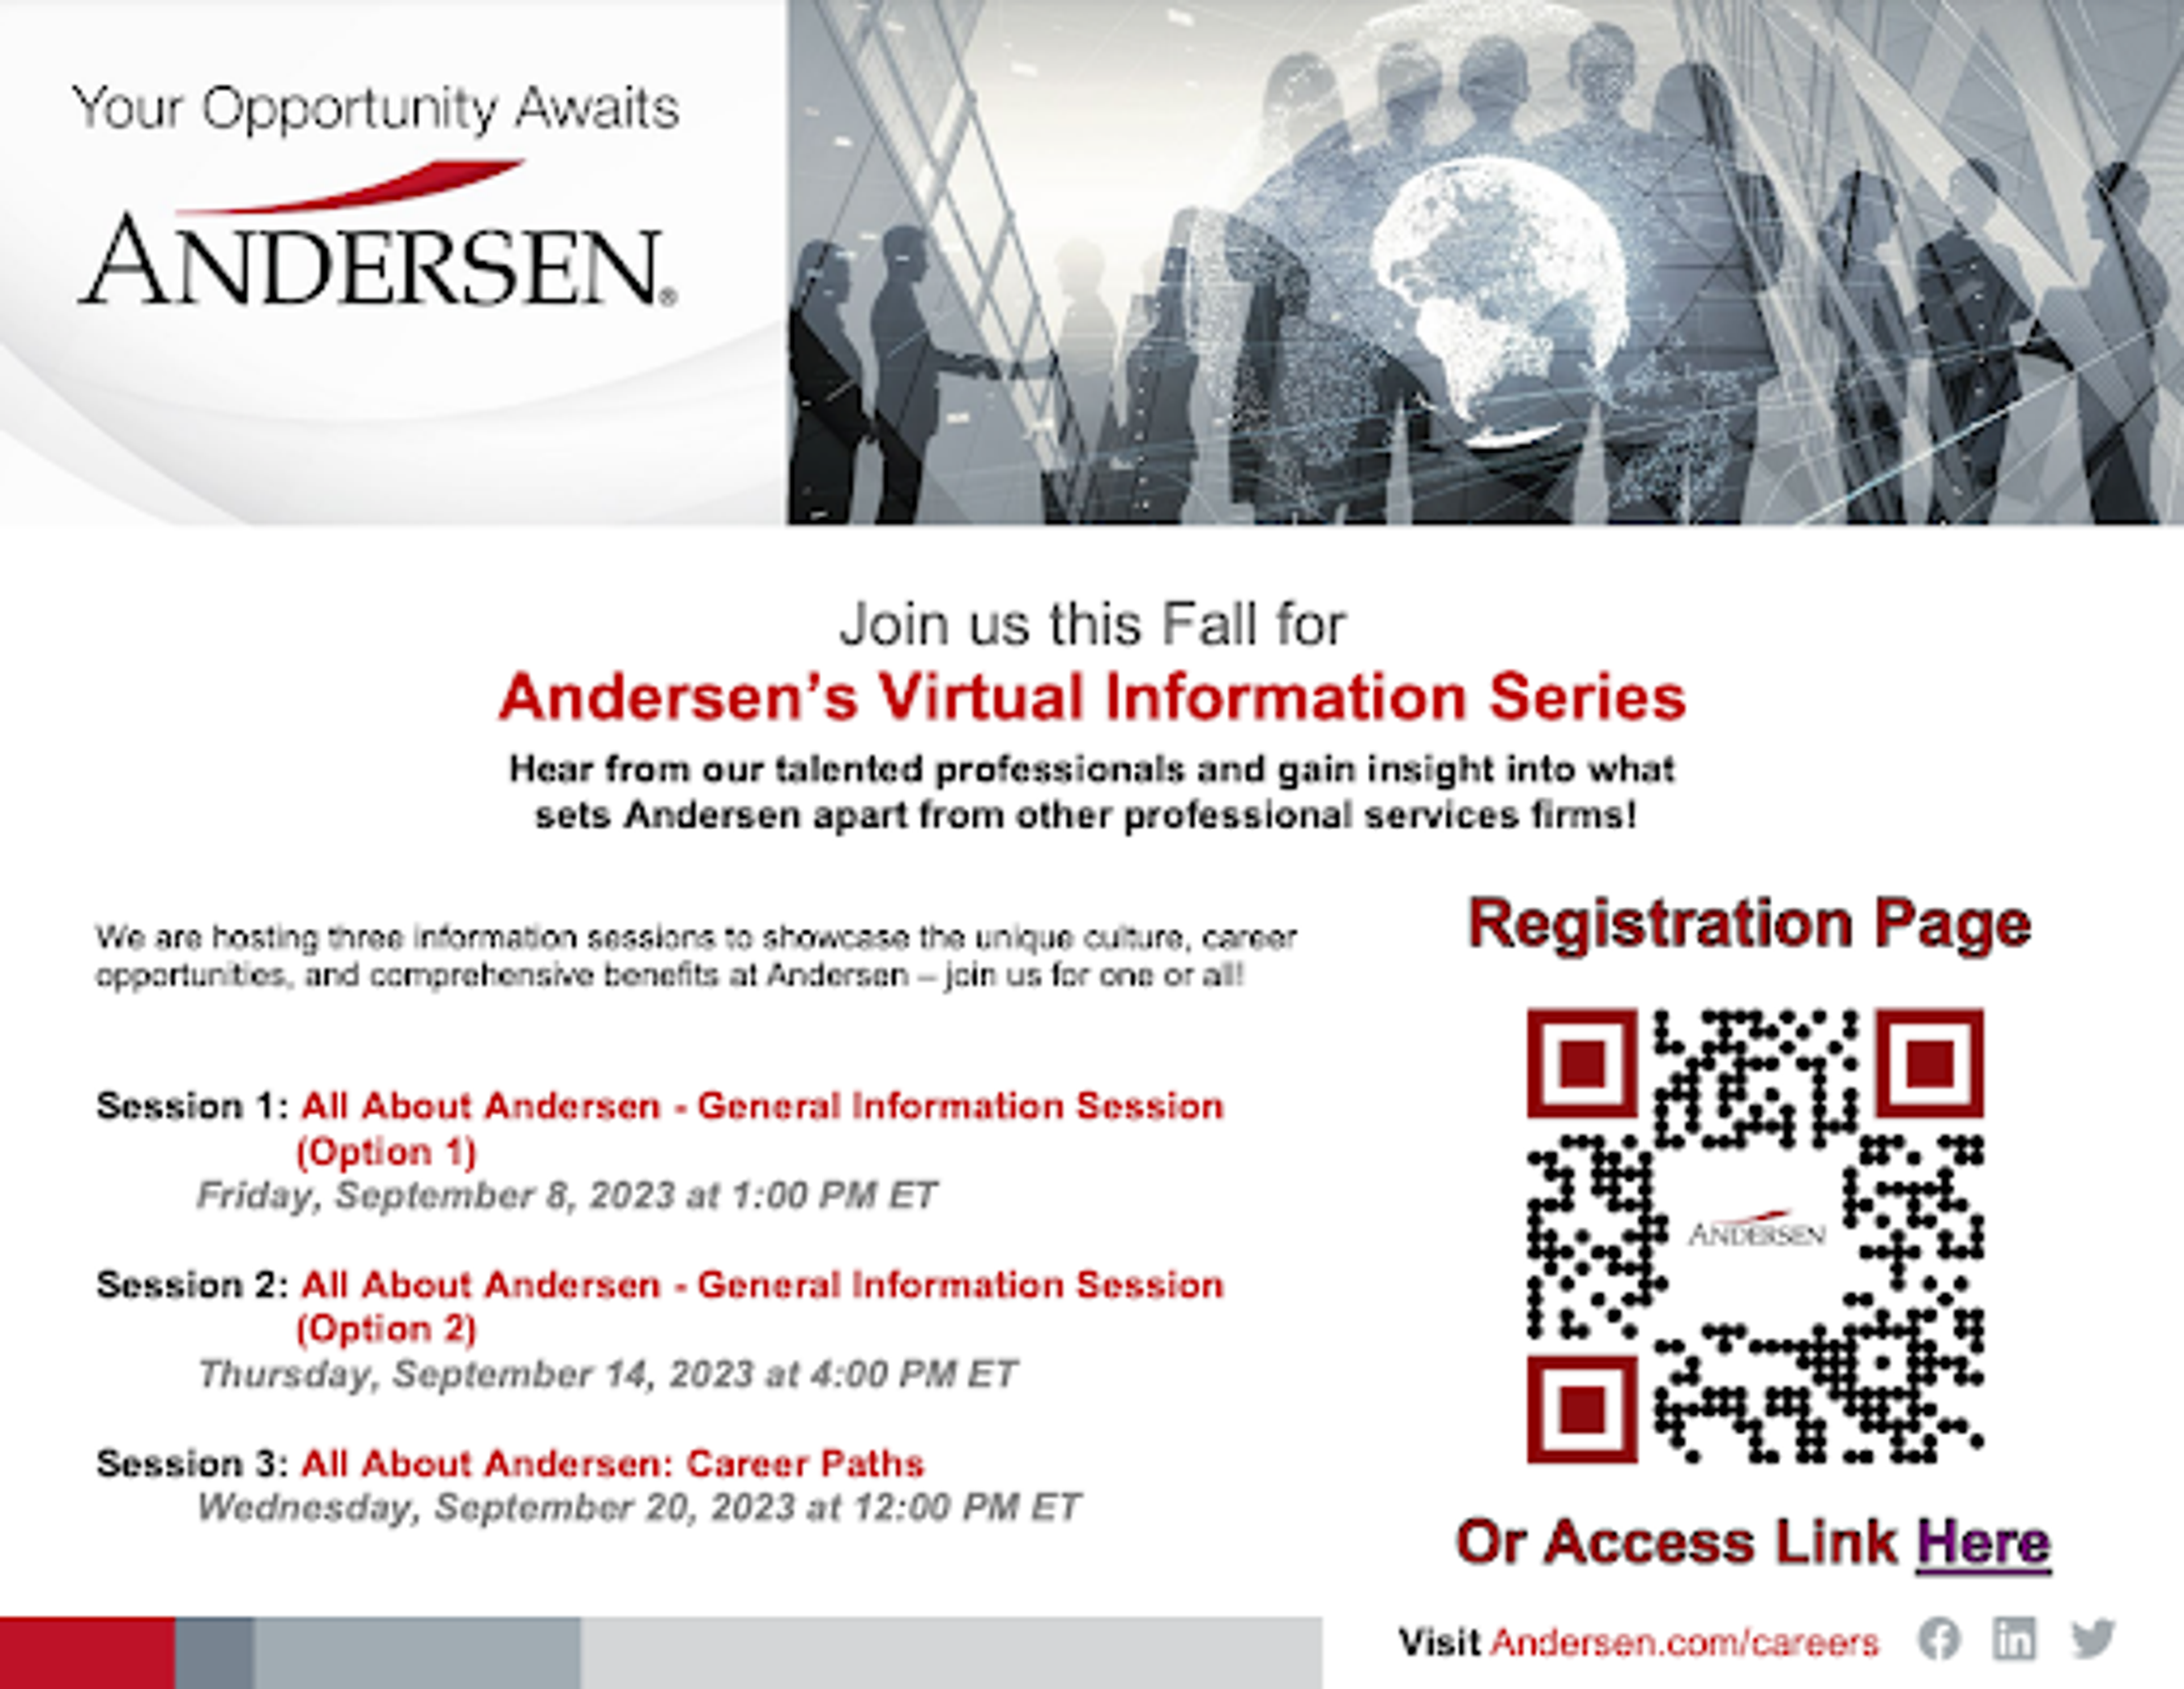 Invite to Andersen's virtual information series